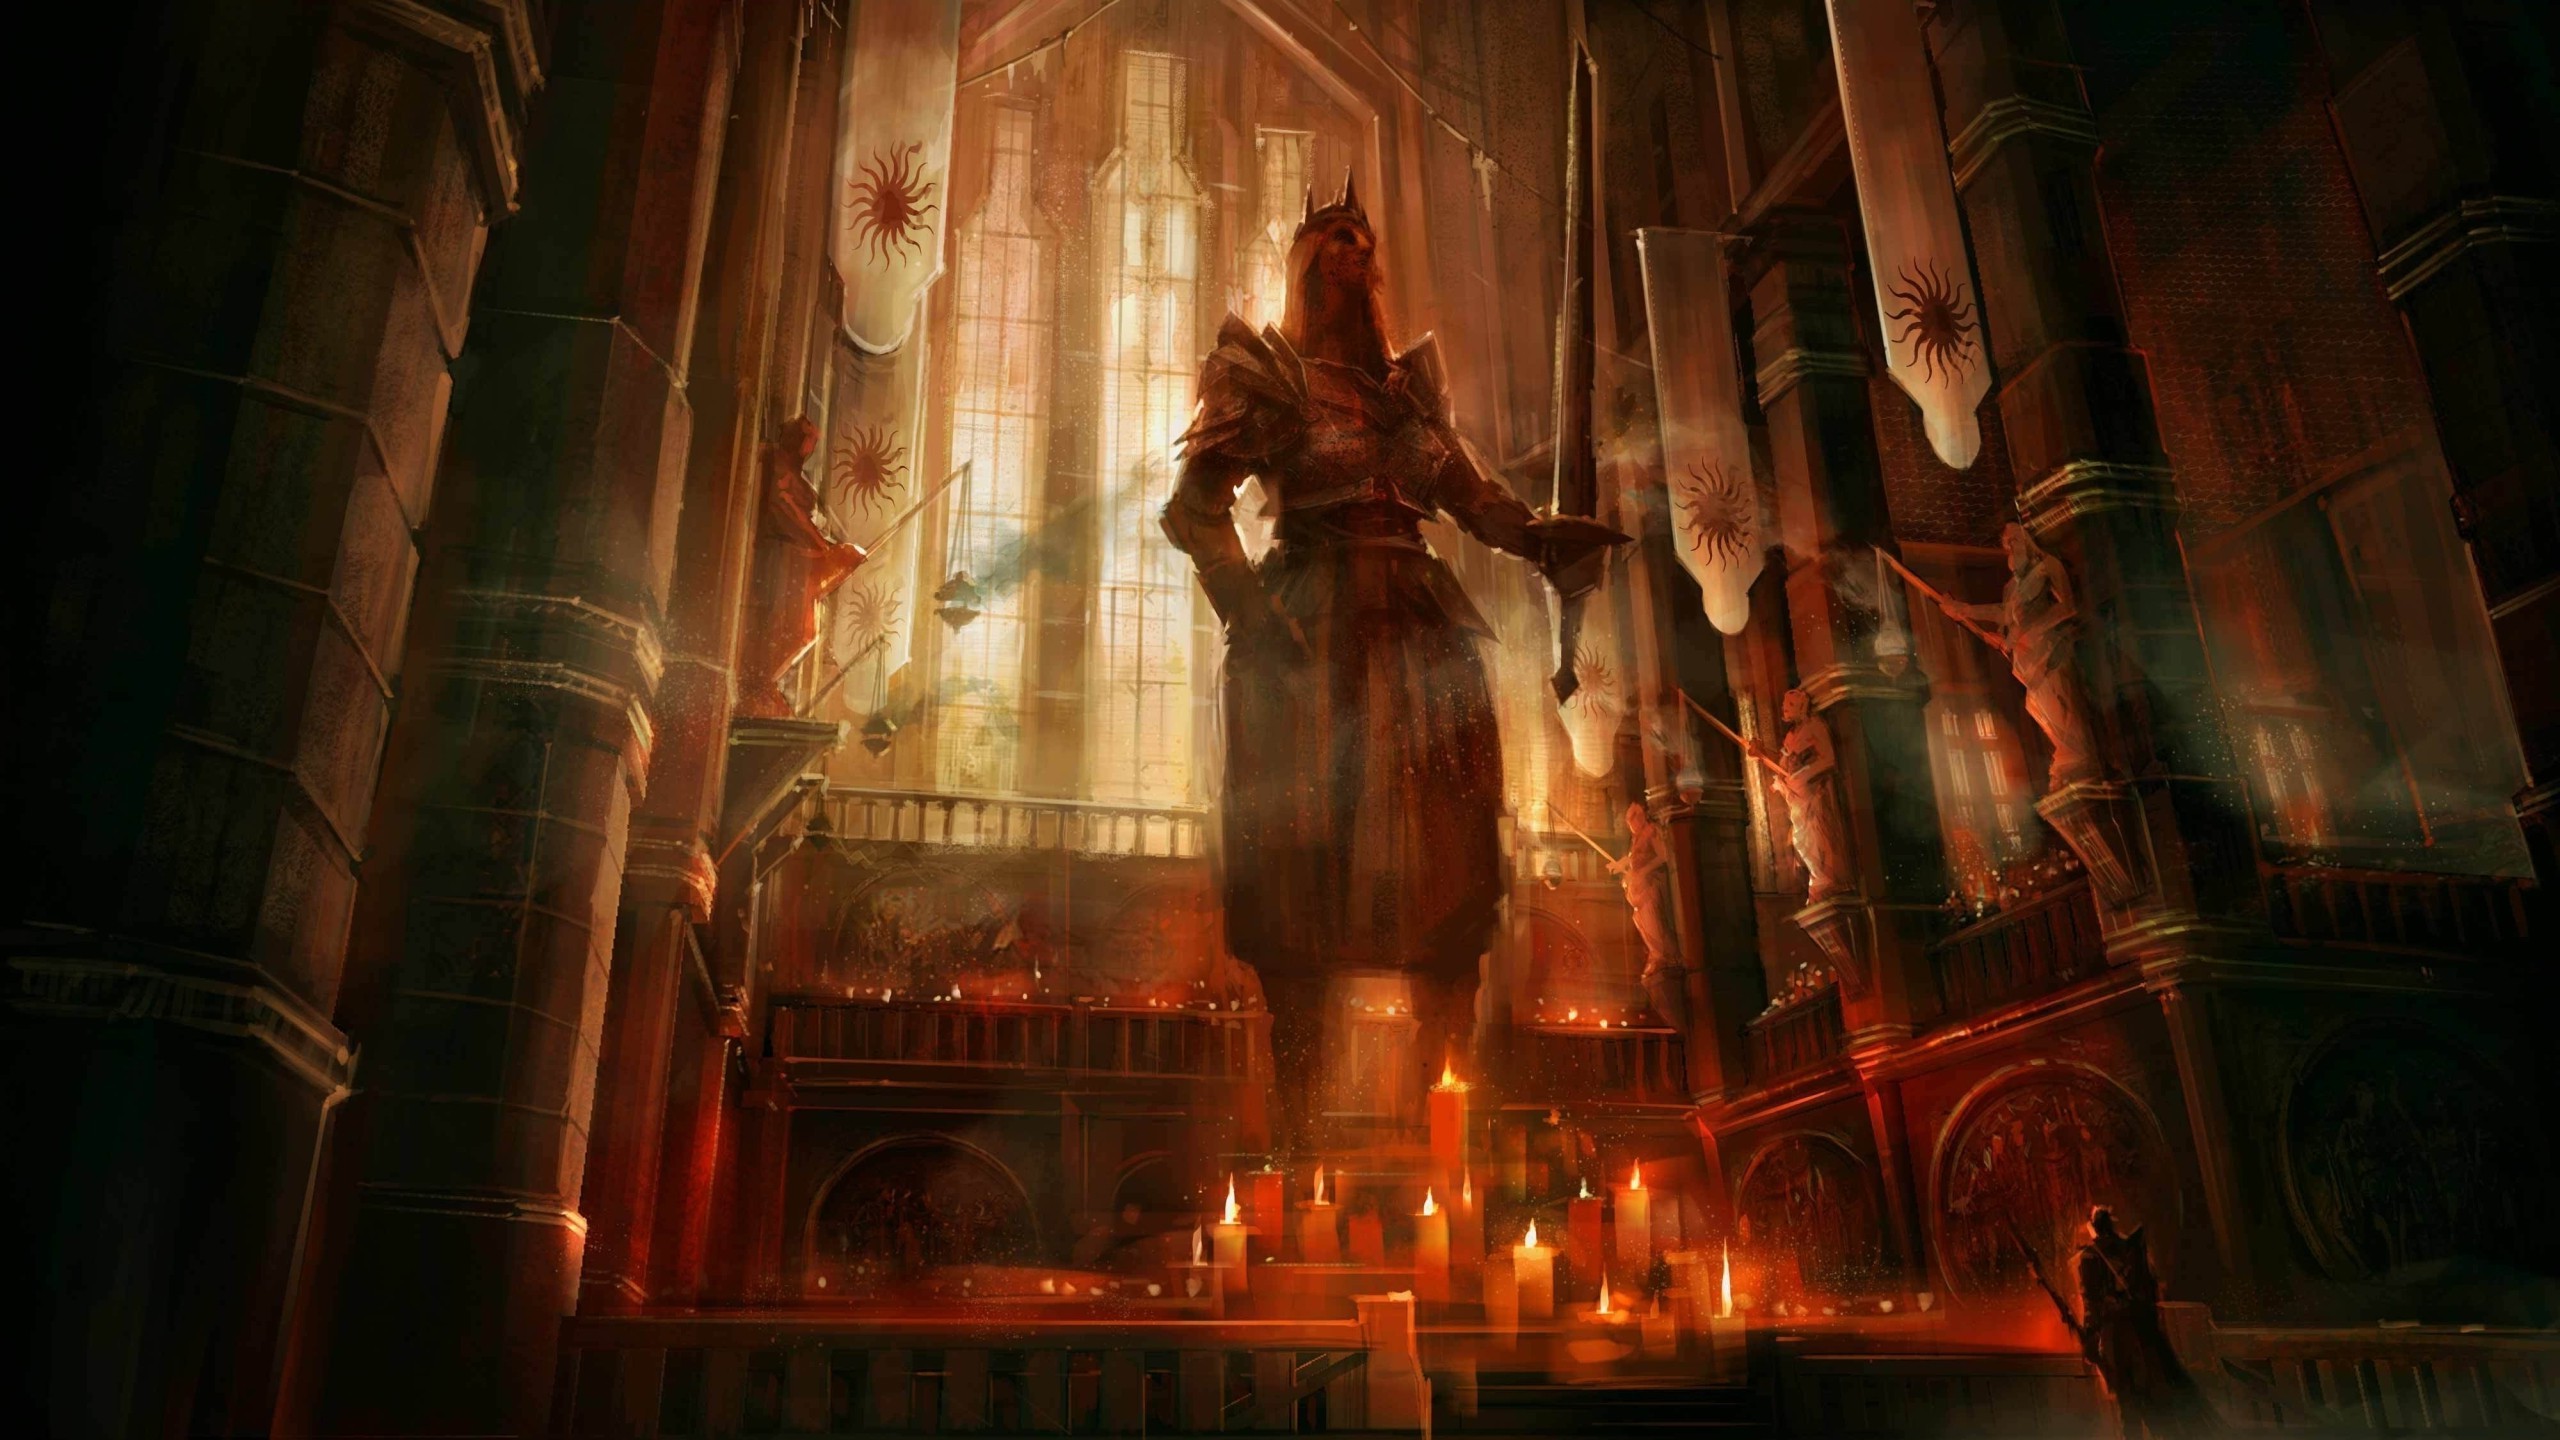 Dragon Age II, Dragon Age, Fantasy Art, Concept Art, Video Games, Candles, Statue, Temple Wallpaper